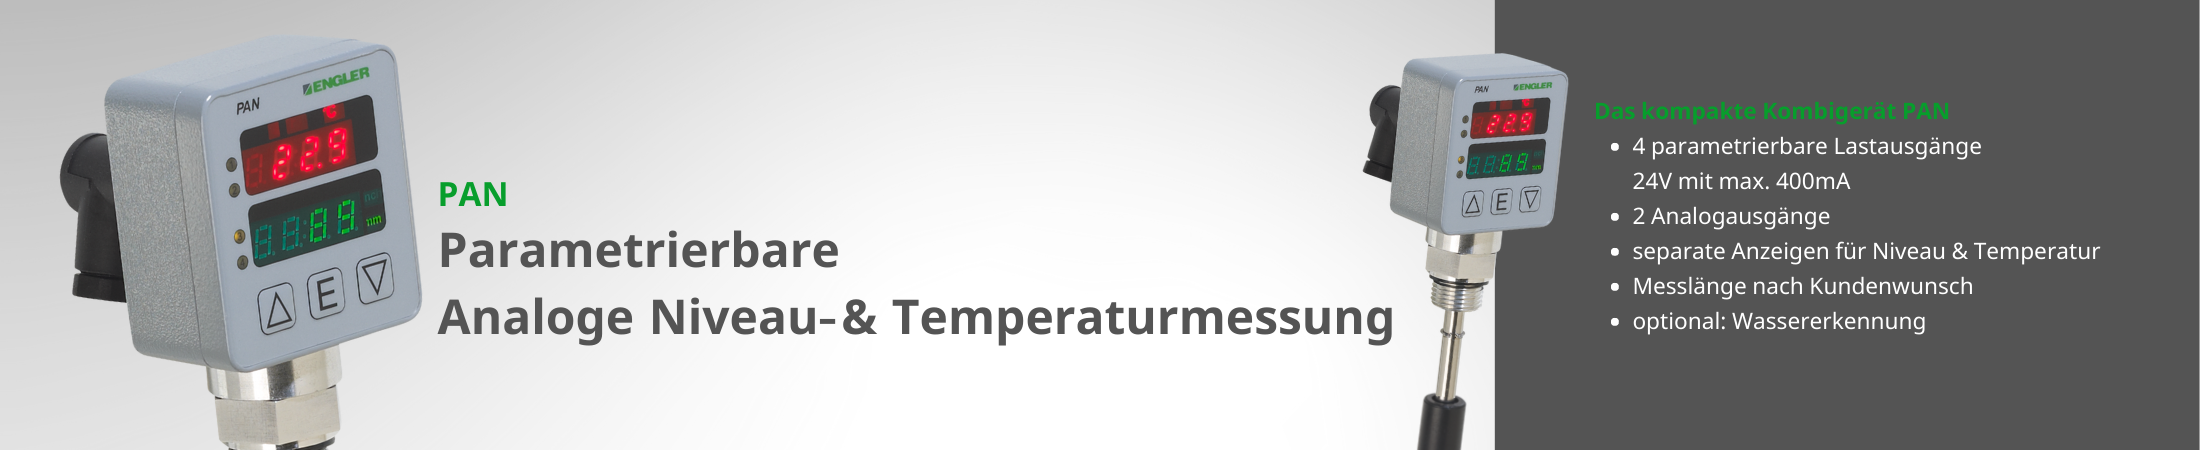 Engler Parametrierbare Analoge Niveau- und Temperaturmessung